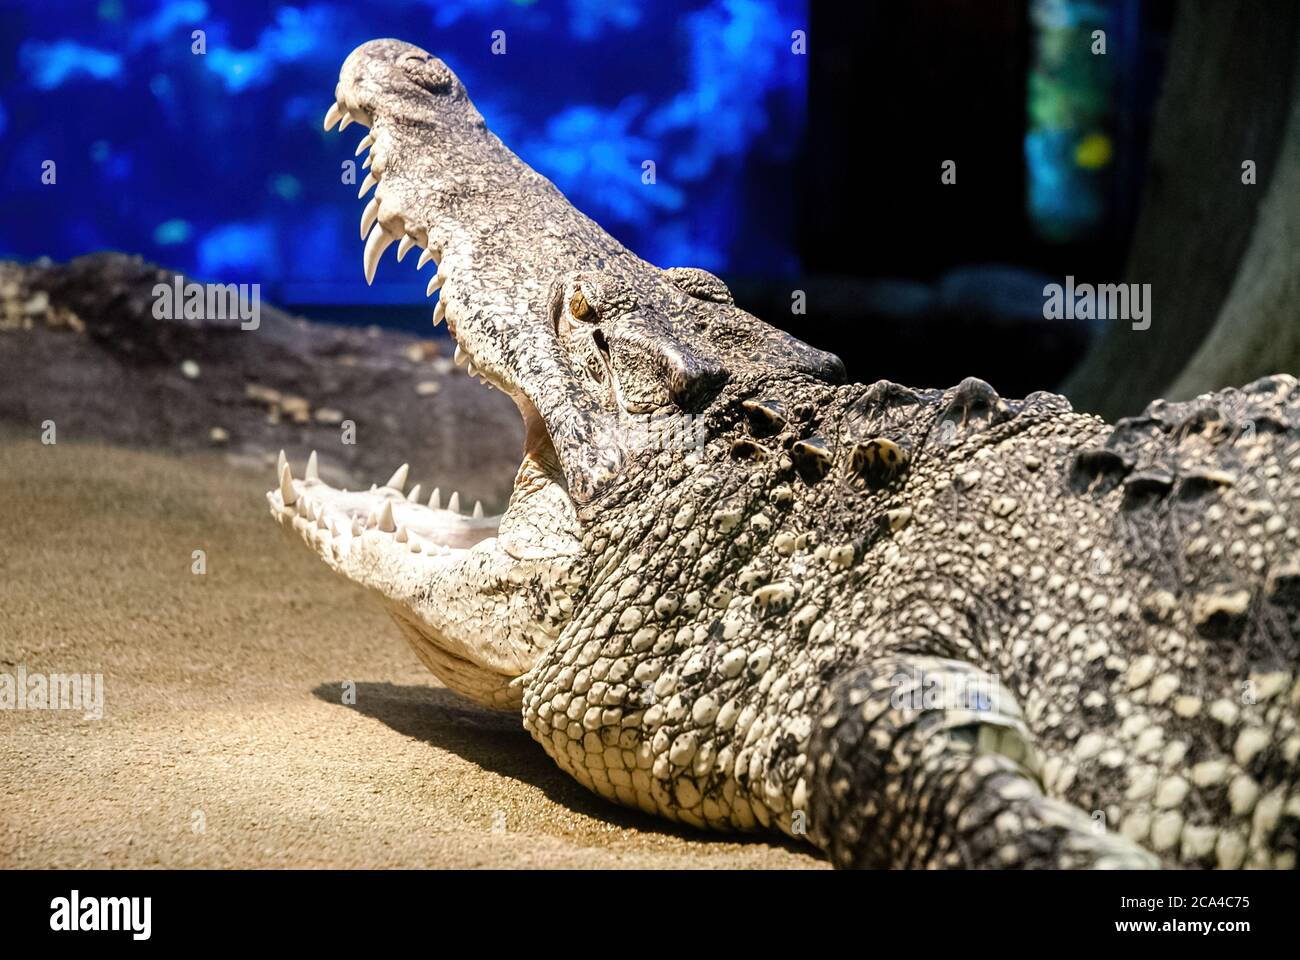 The Cuban crocodile (Crocodylus rhombifer) is a small species of crocodile found only in Cuba. Stock Photo